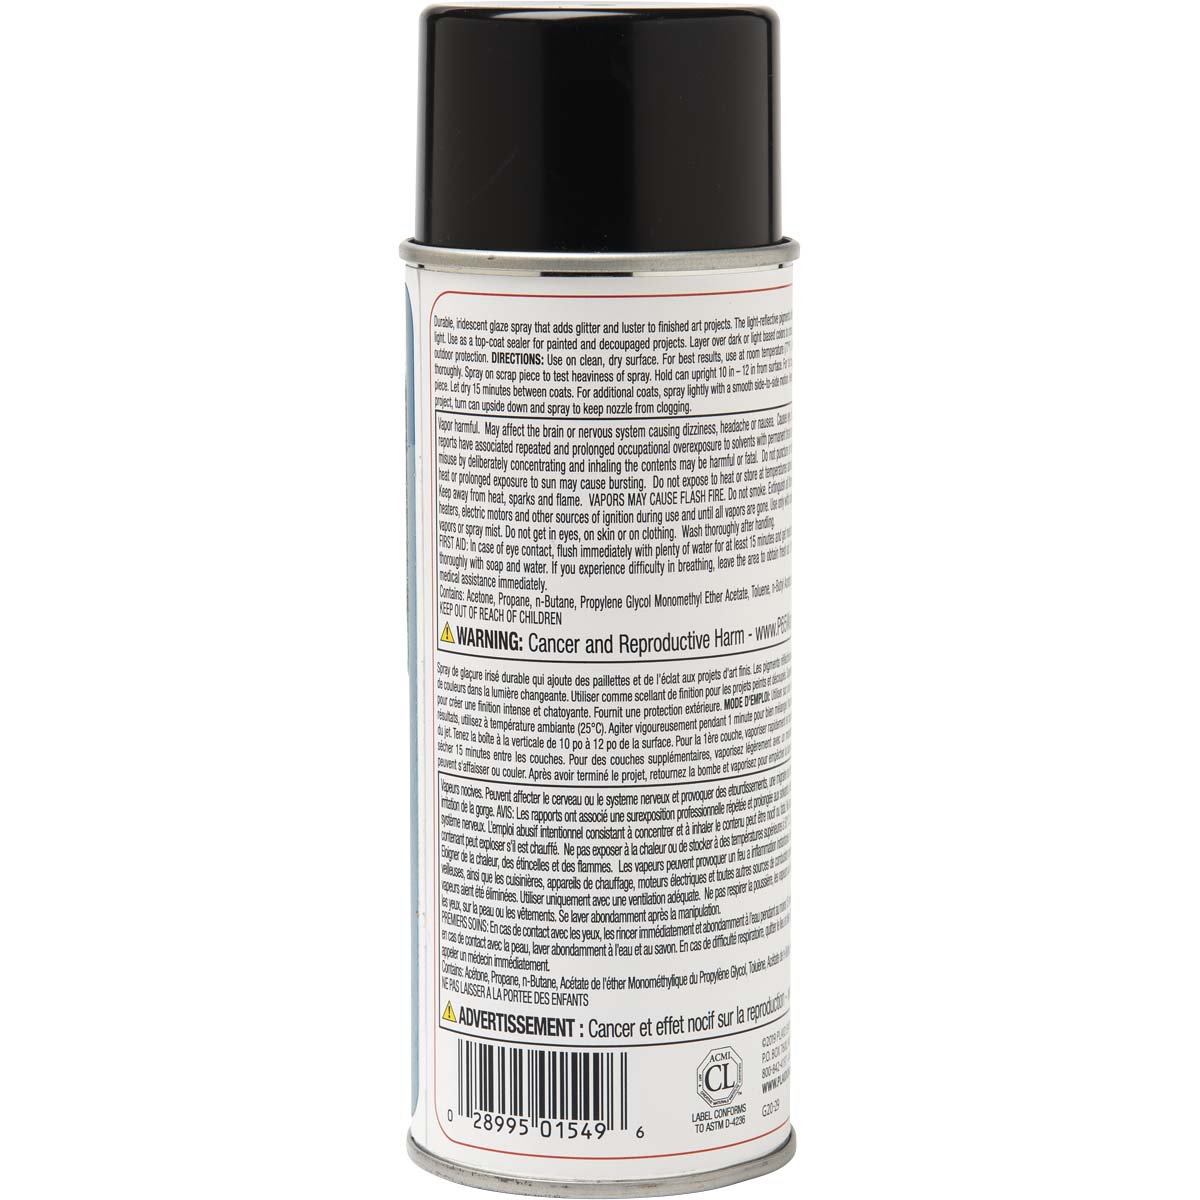 Mod Podge ® Iridescent Acrylic Sealer - Iridescent, 8 oz. - 1549